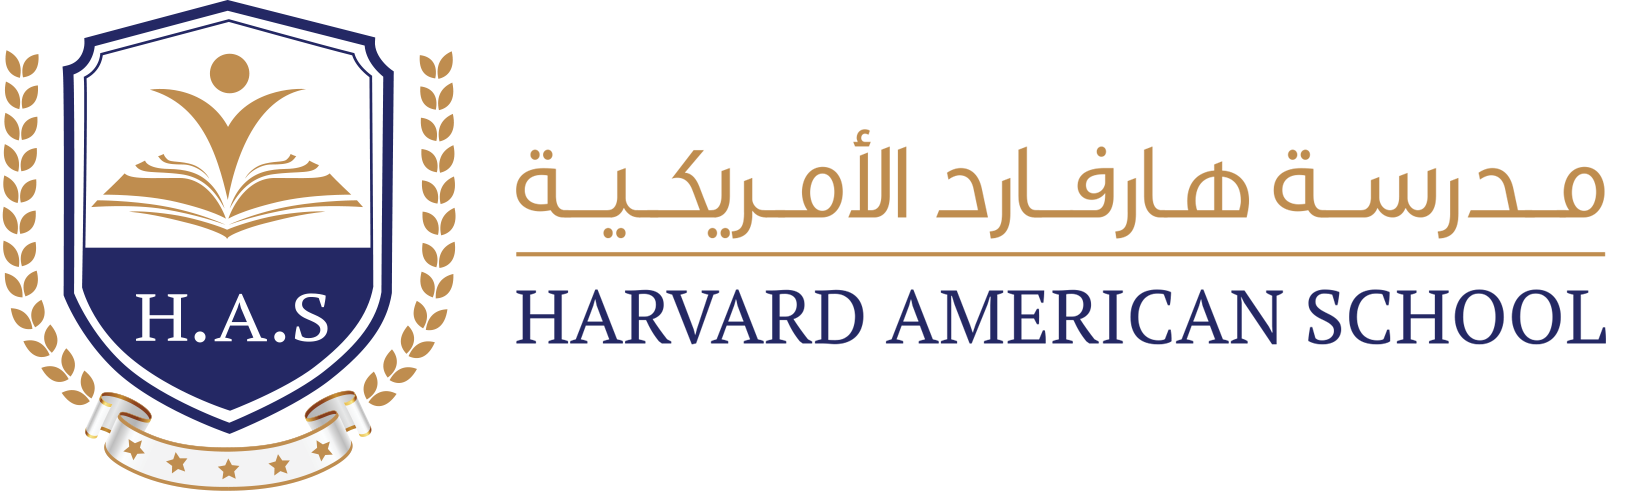 Harvard American School